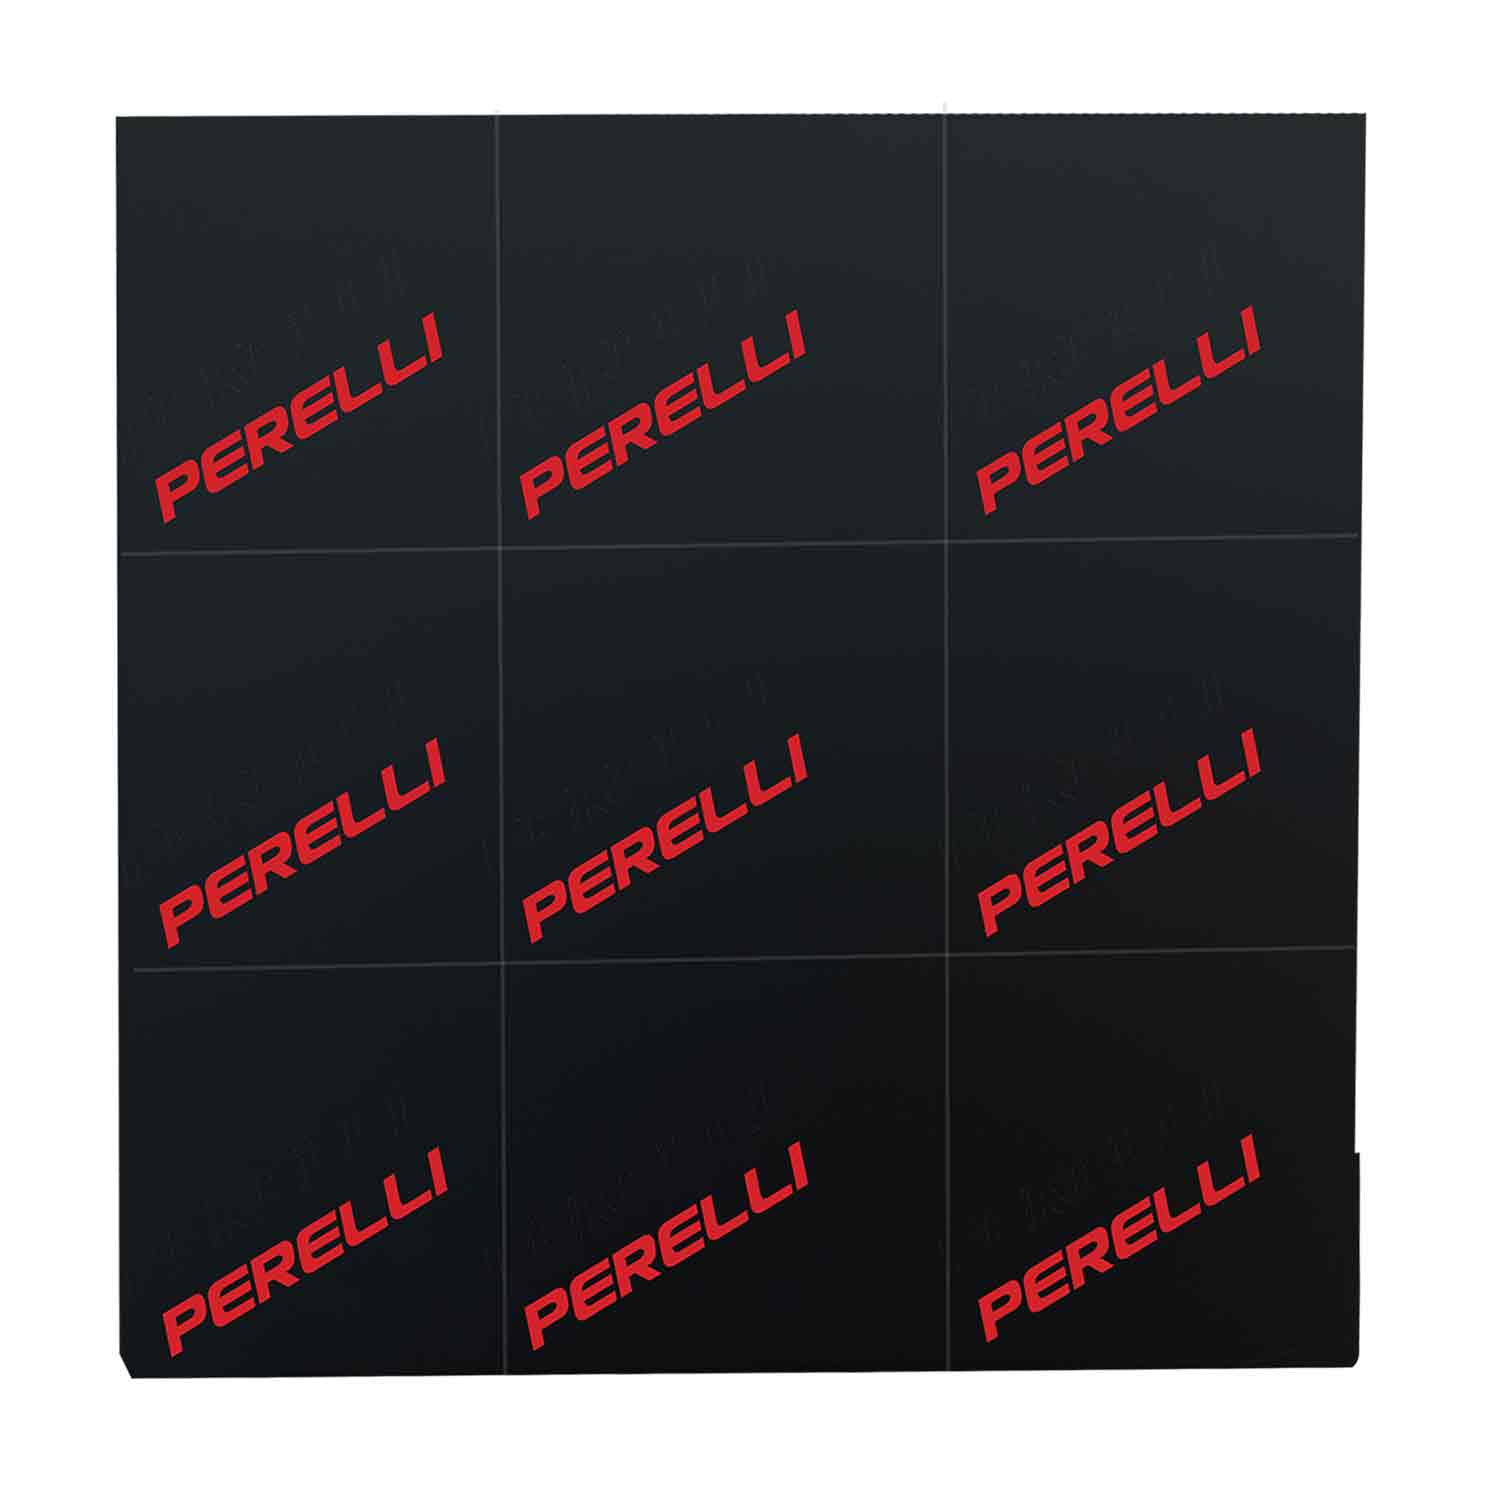 BIGshot Perelli 132cm Field Mat (9 Cubes)